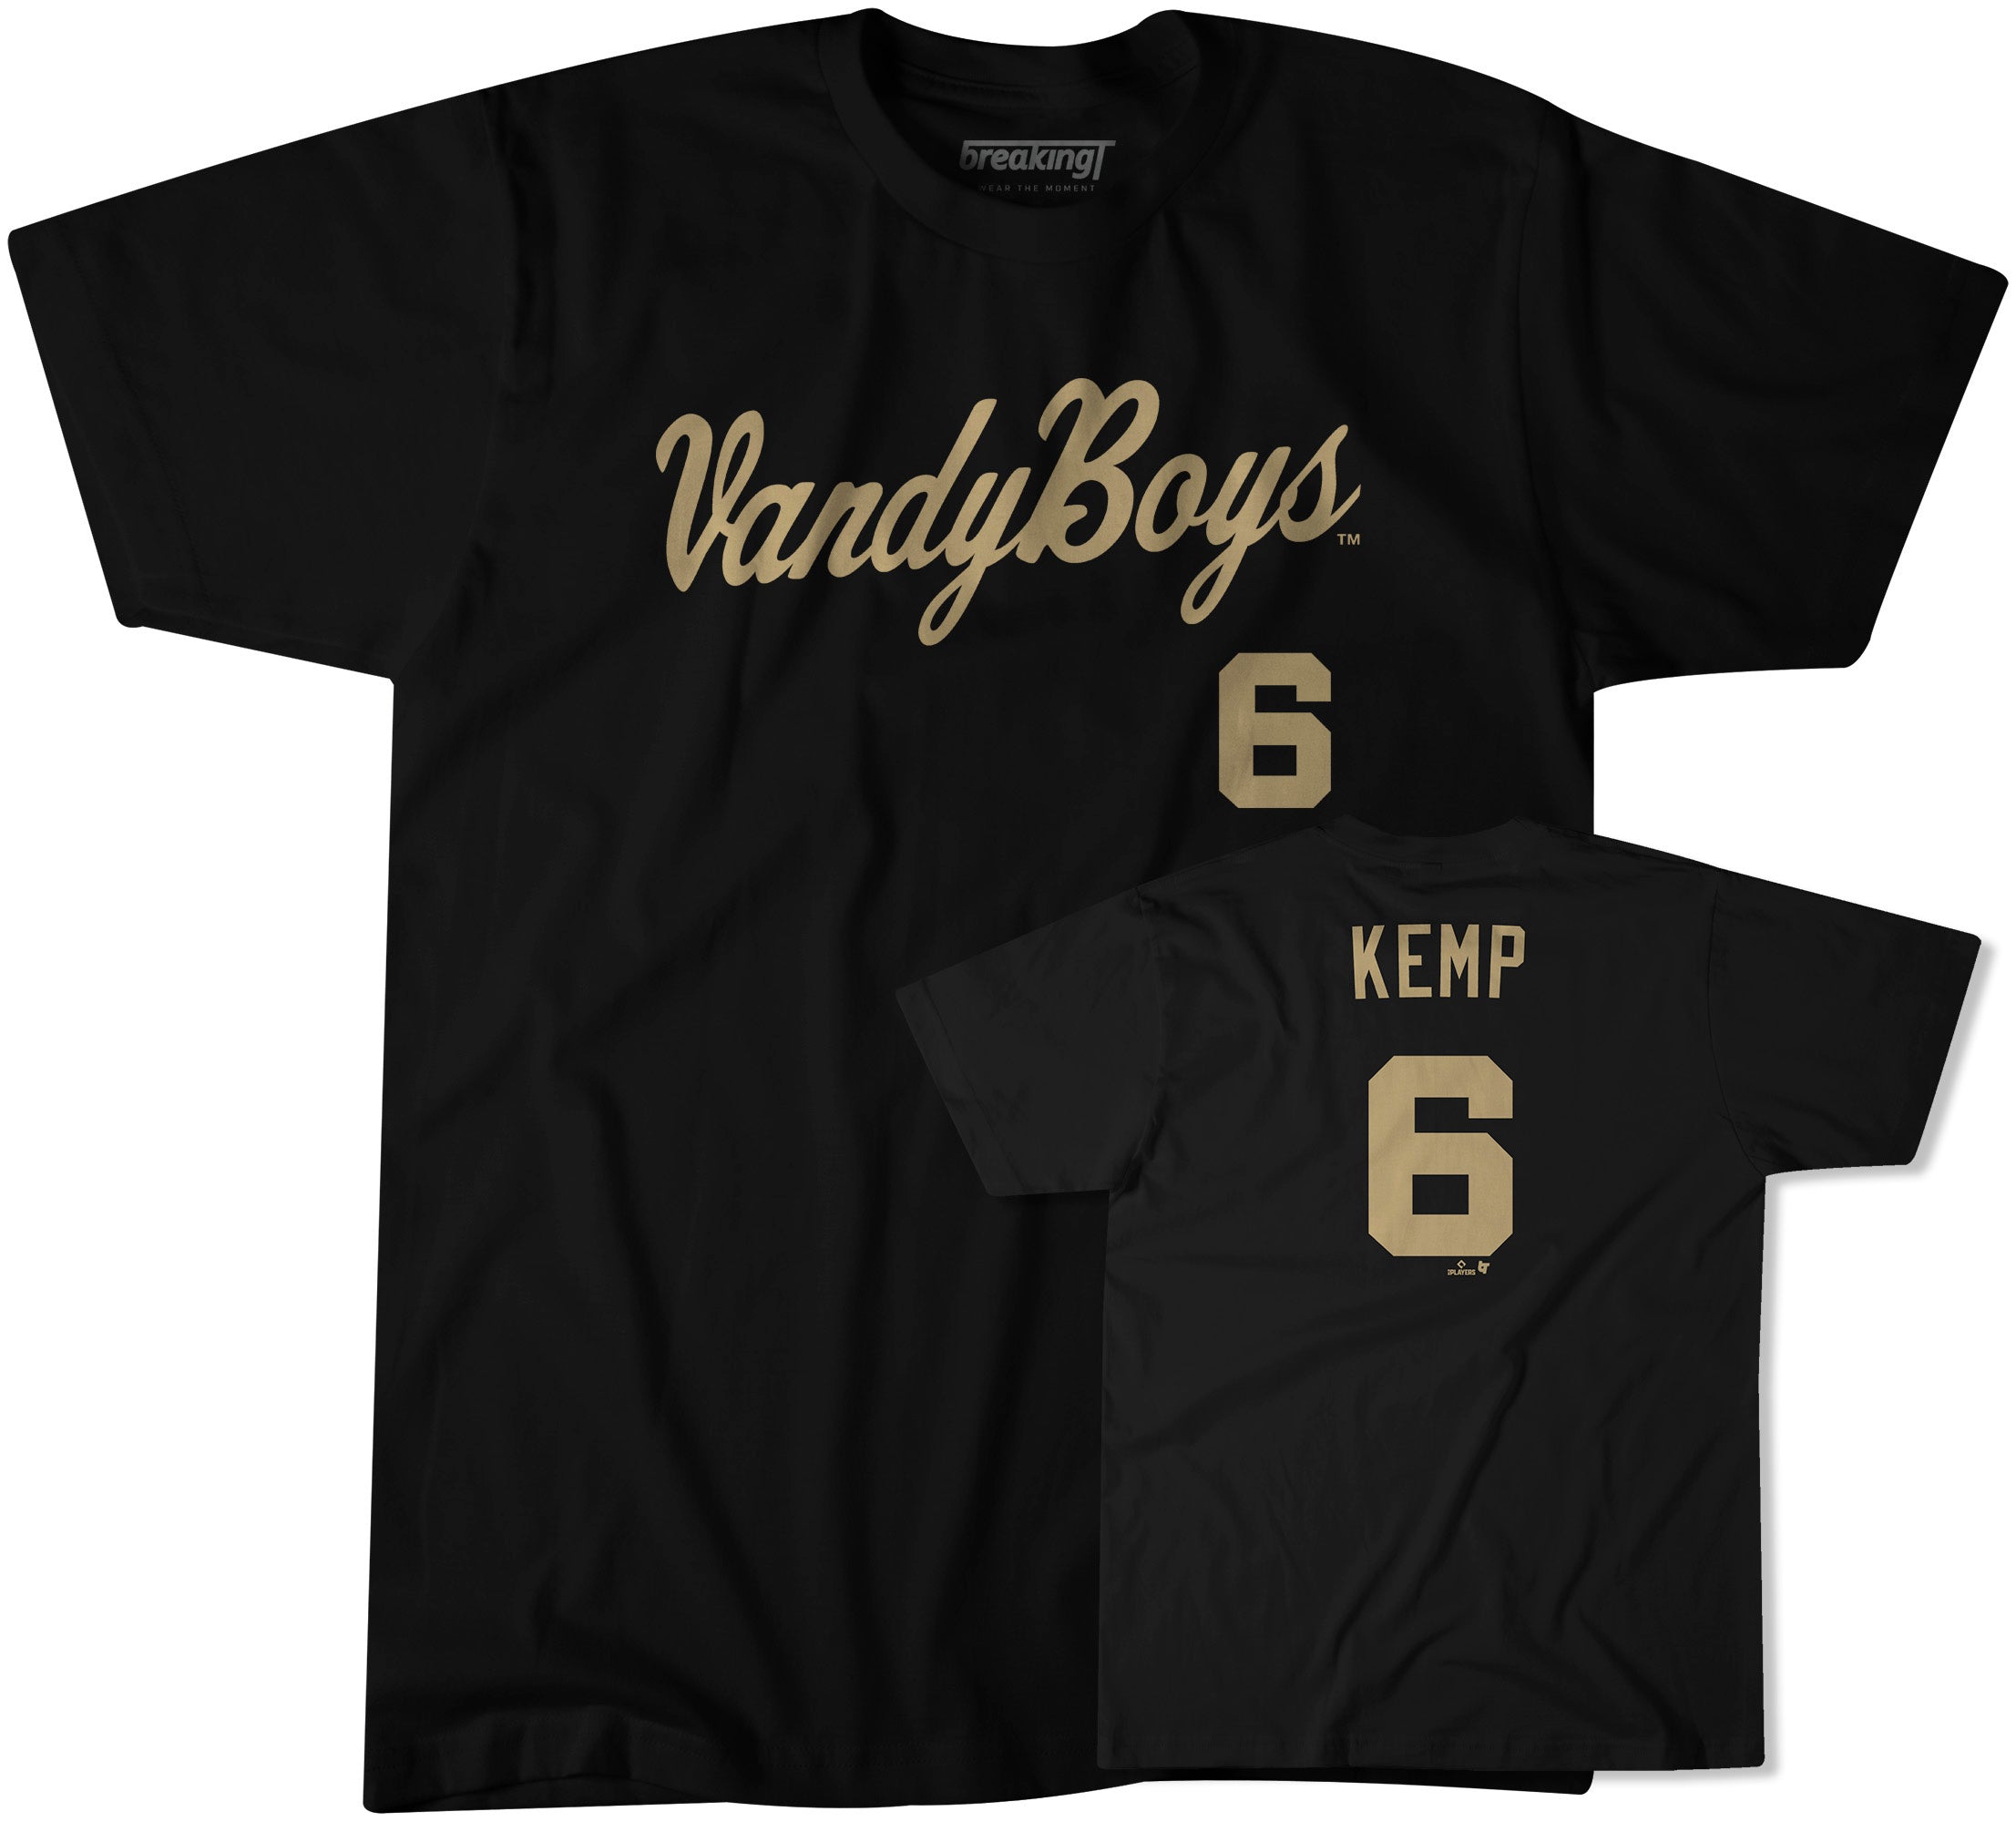 Tony Kemp Vandy Boys Shirt - Officially Licensed - BreakingT